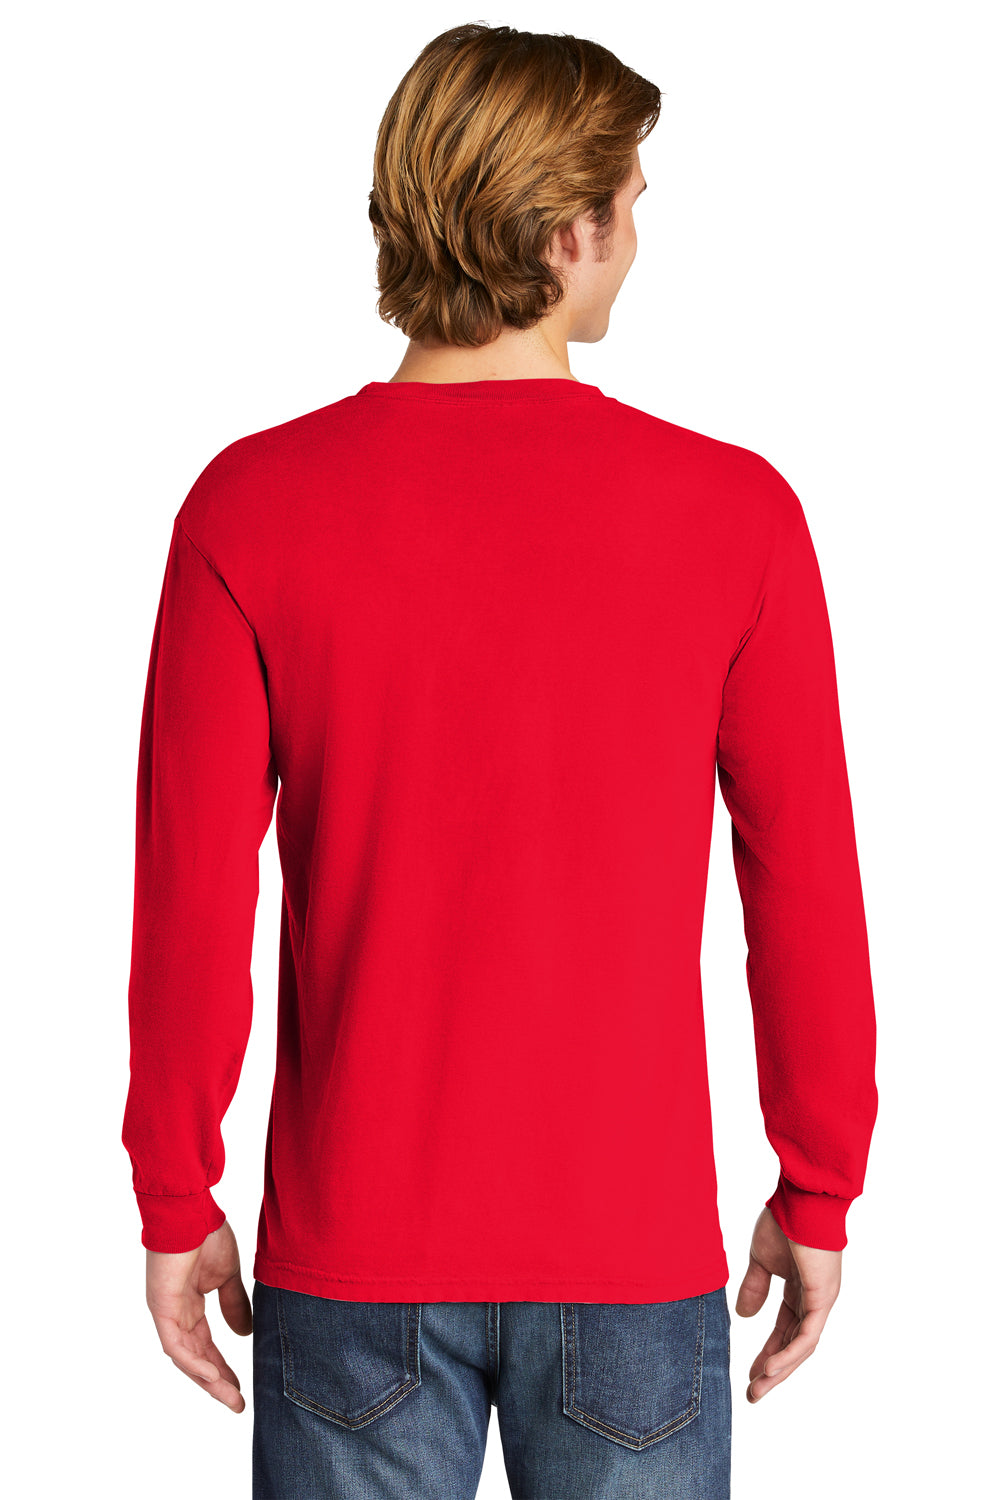 Comfort Colors 6014/C6014 Mens Long Sleeve Crewneck T-Shirt Red Back